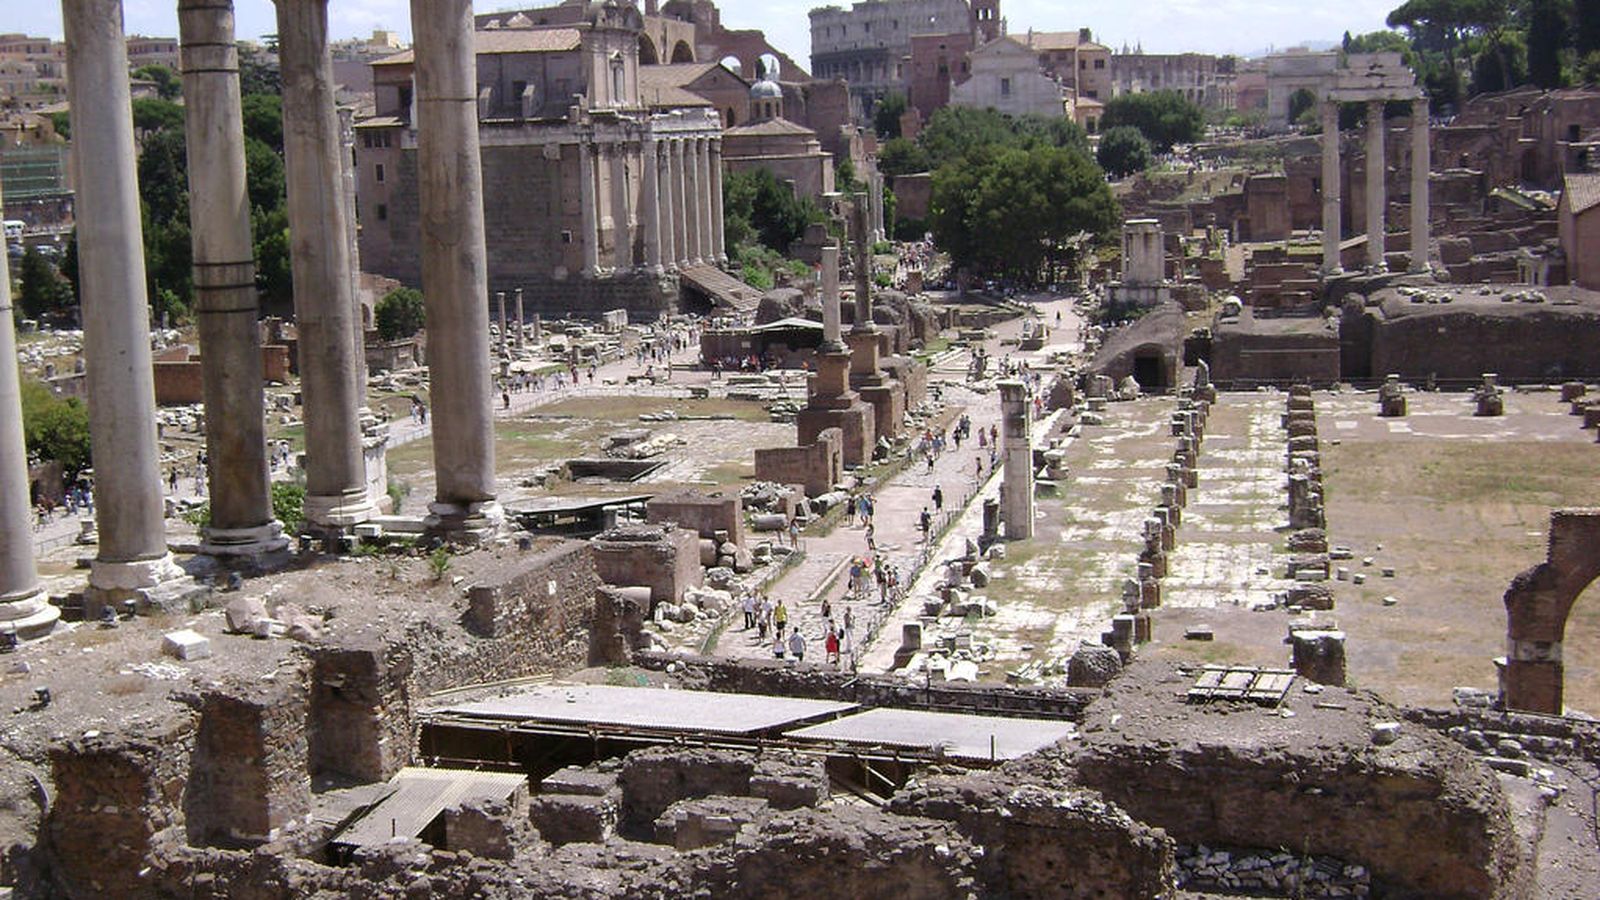 Foto: Foro romano de la capital de Italia. De fondo, el Coliseo (Flickr/Fabio Spinozzi)